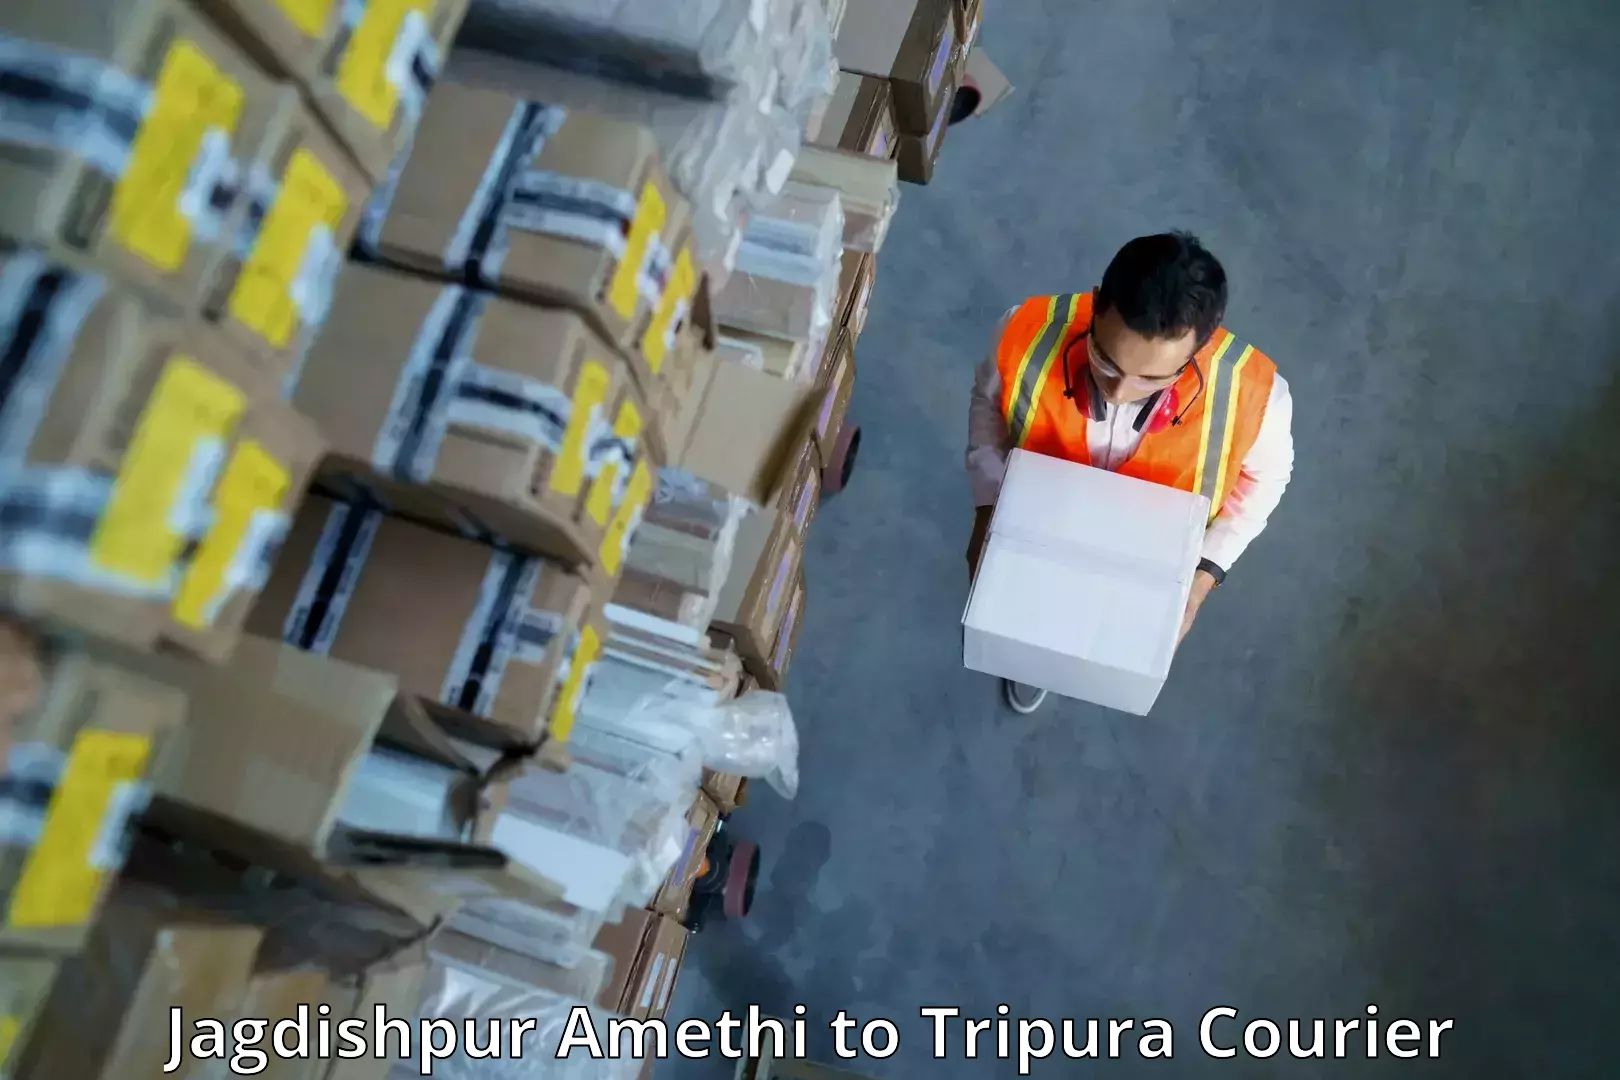 Easy access courier services Jagdishpur Amethi to Agartala